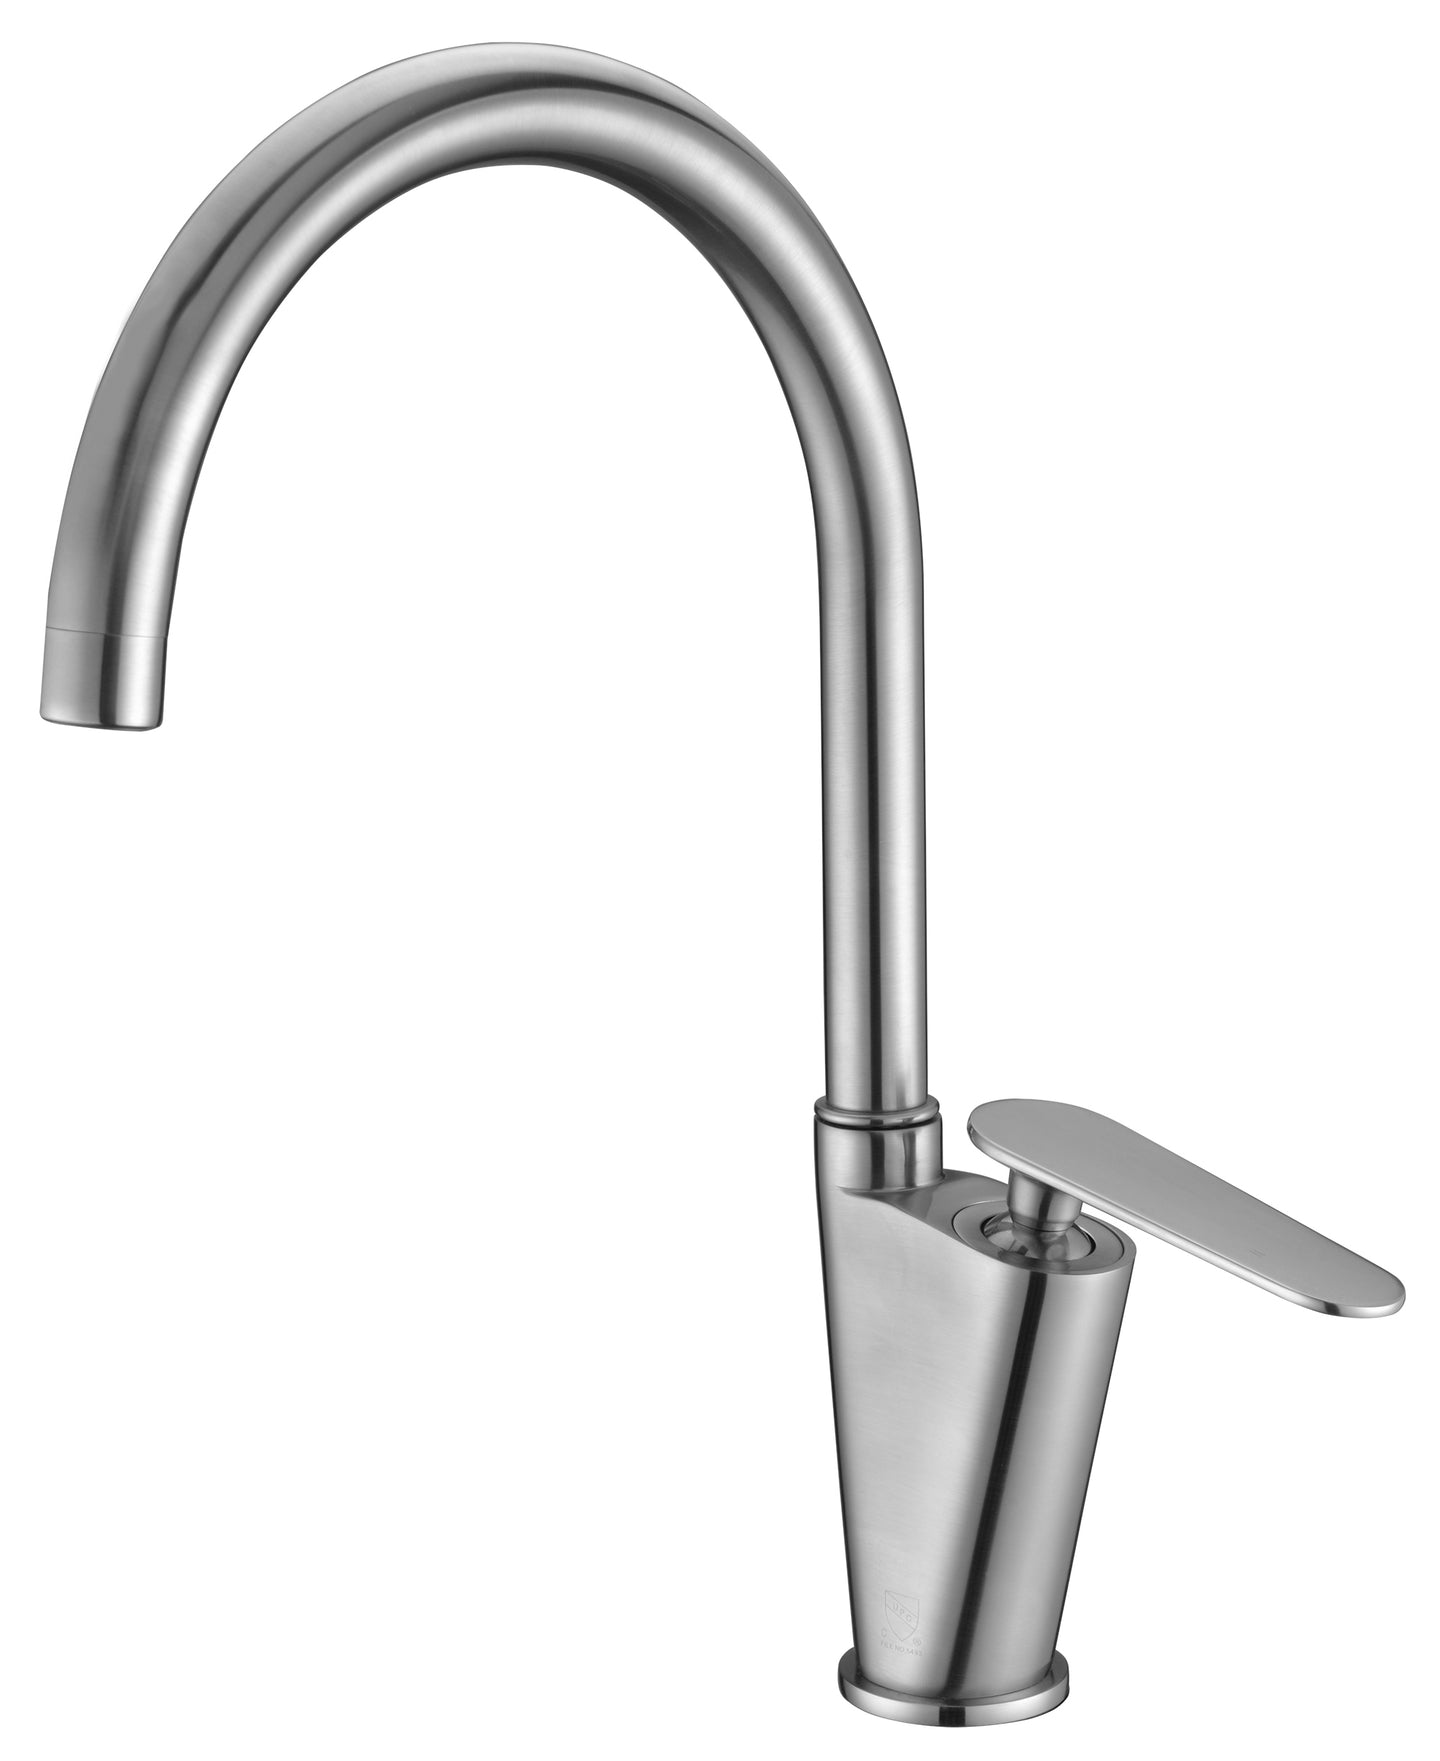 ALFI brand AB3600-BN Brushed Nickel Gooseneck Single Hole Bathroom Faucet